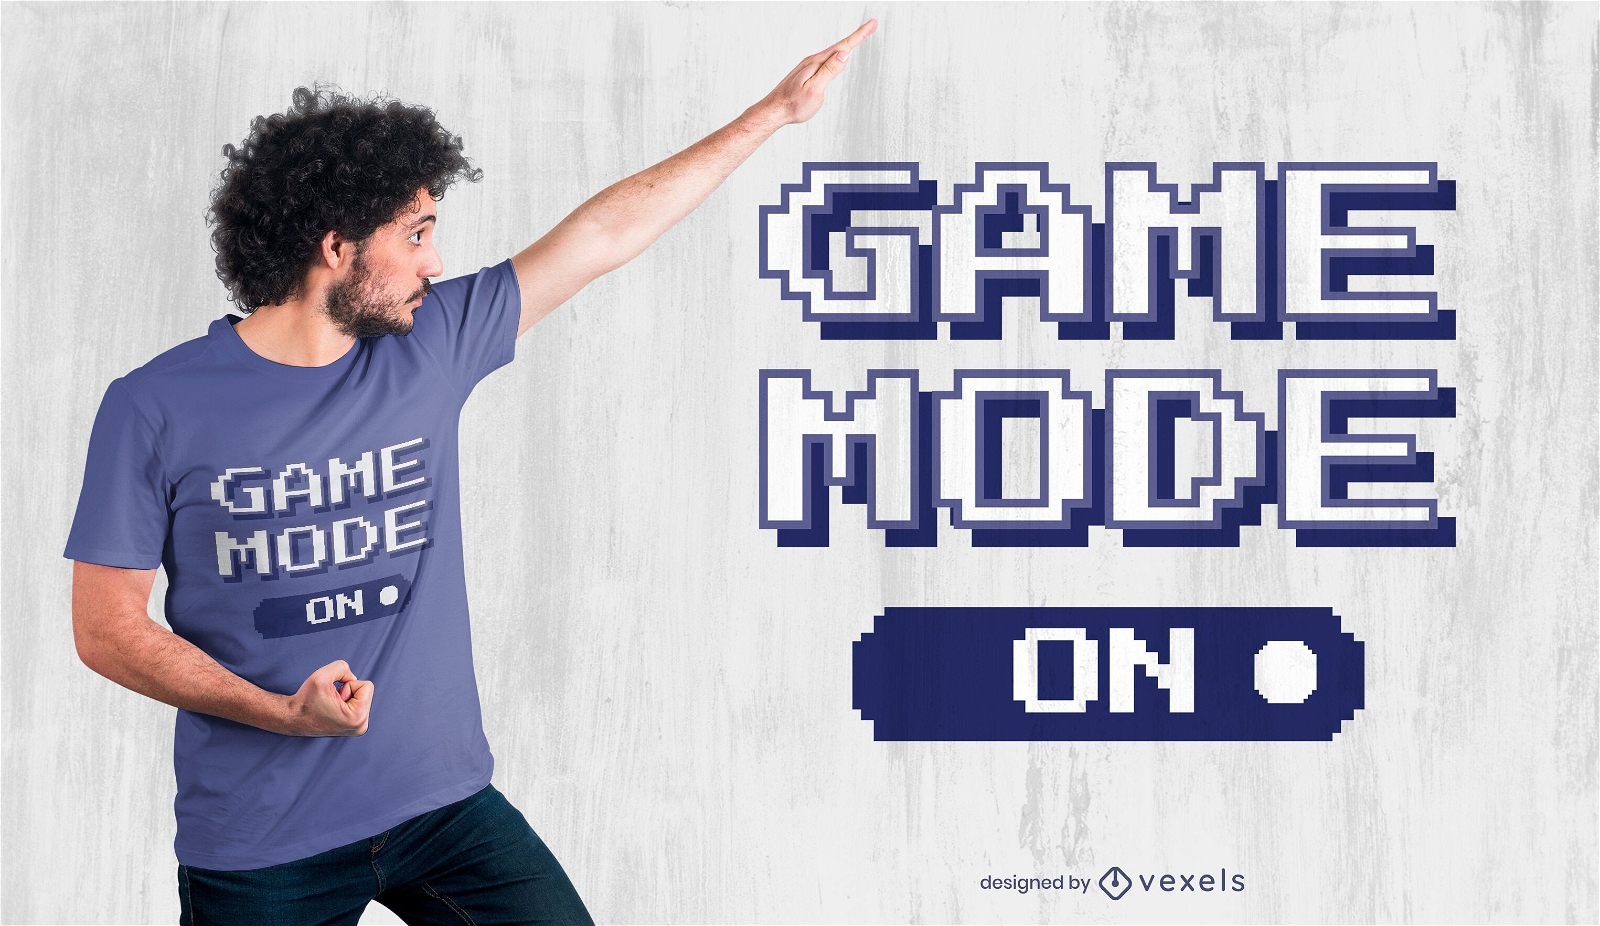 Game mode on t-shirt design